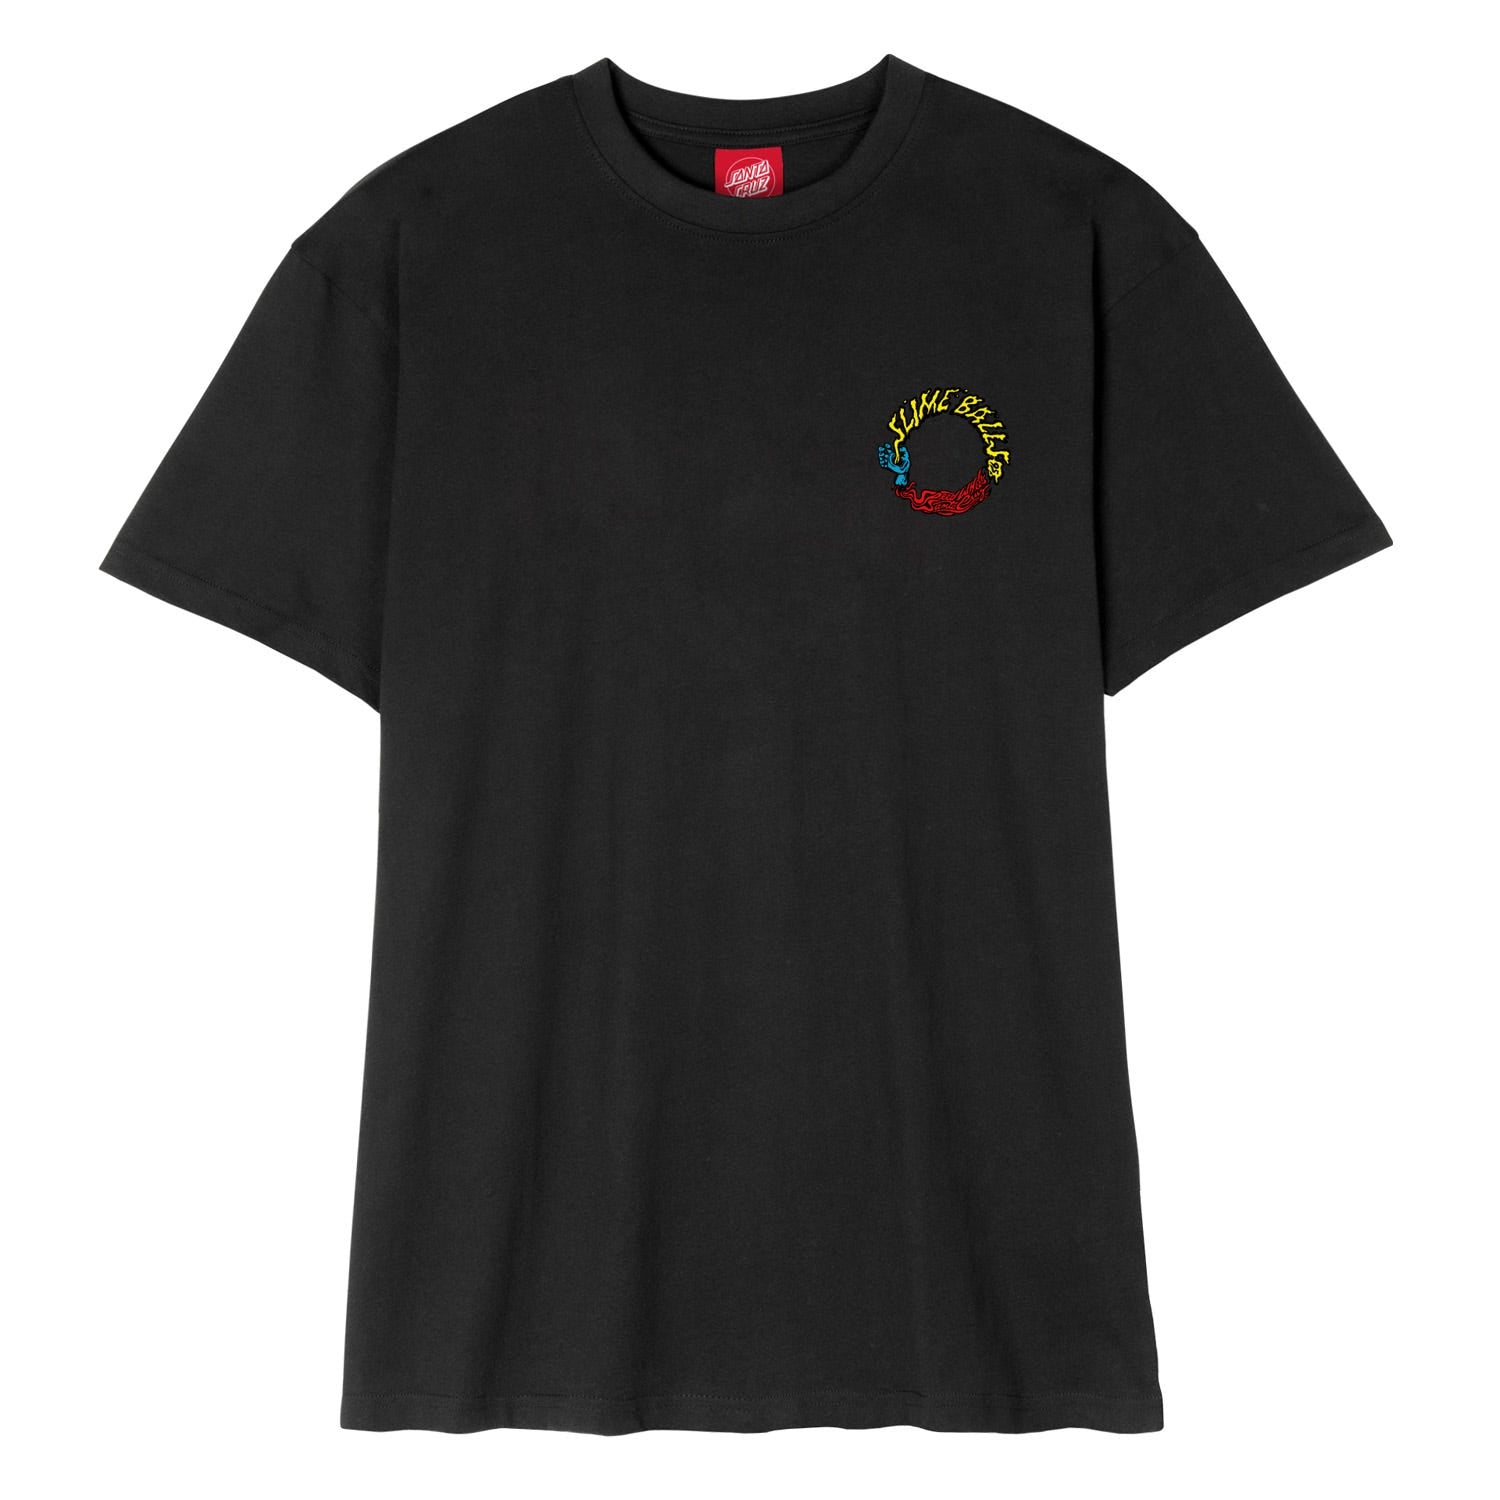 Santa Cruz Fakie To Ralf T-Shirt Black Large Sample 50% off